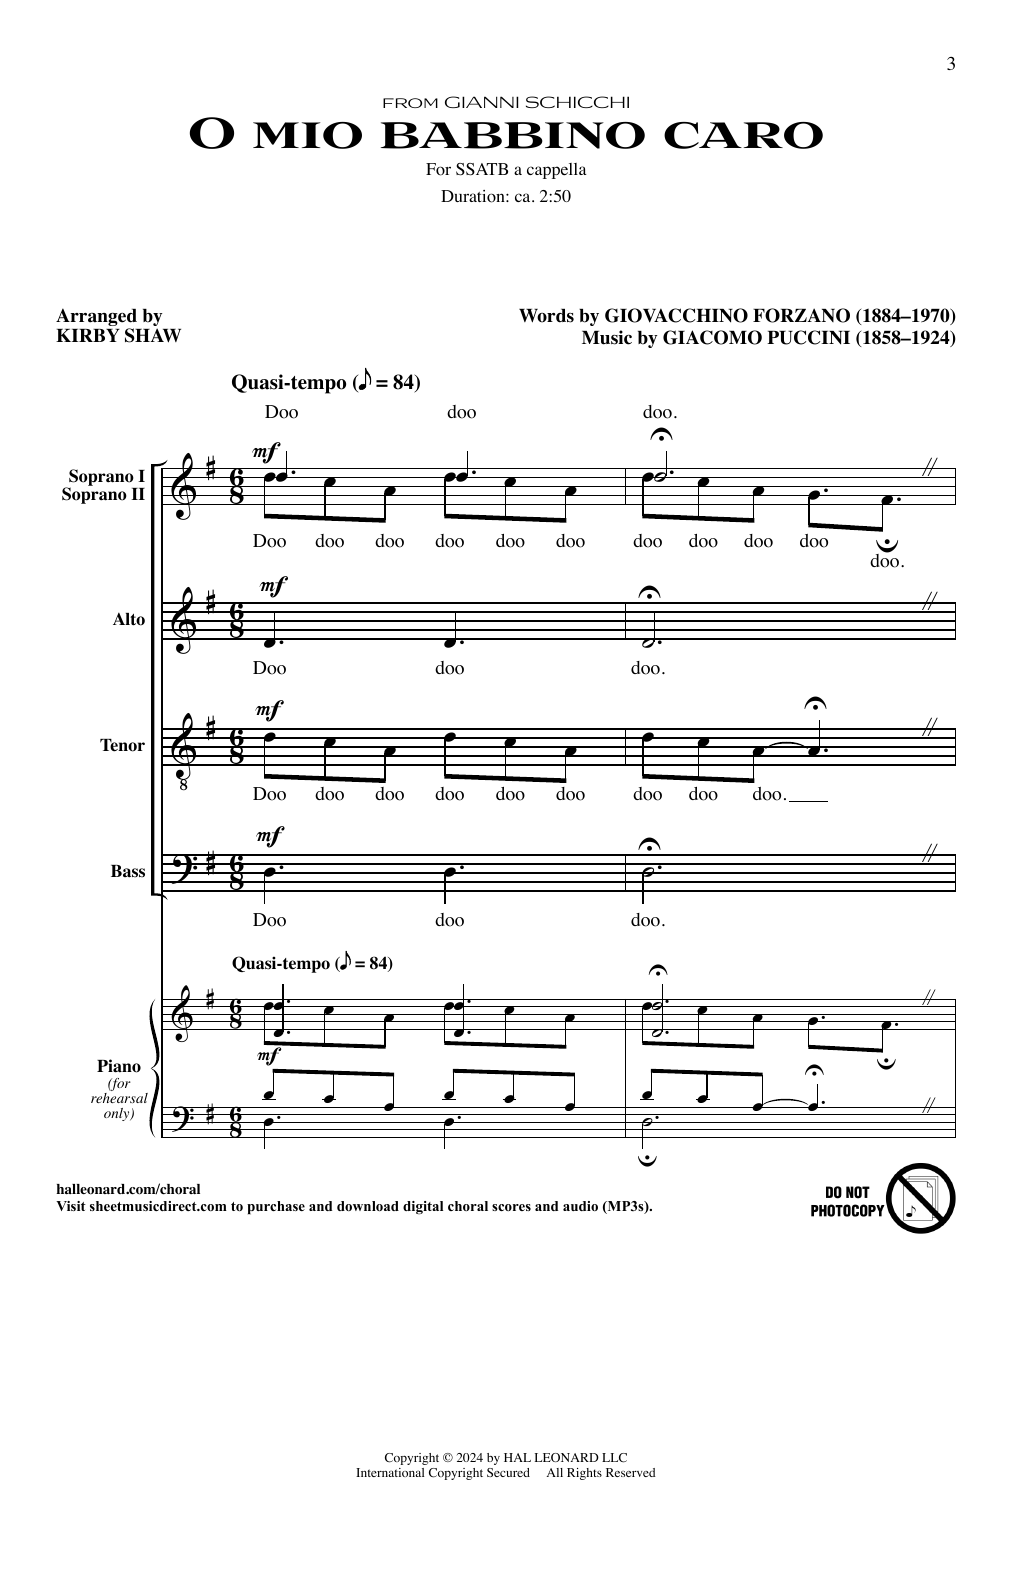 Giacomo Puccini O Mio Babbino Caro (arr. Kirby Shaw) Sheet Music Notes & Chords for SSATB Choir - Download or Print PDF